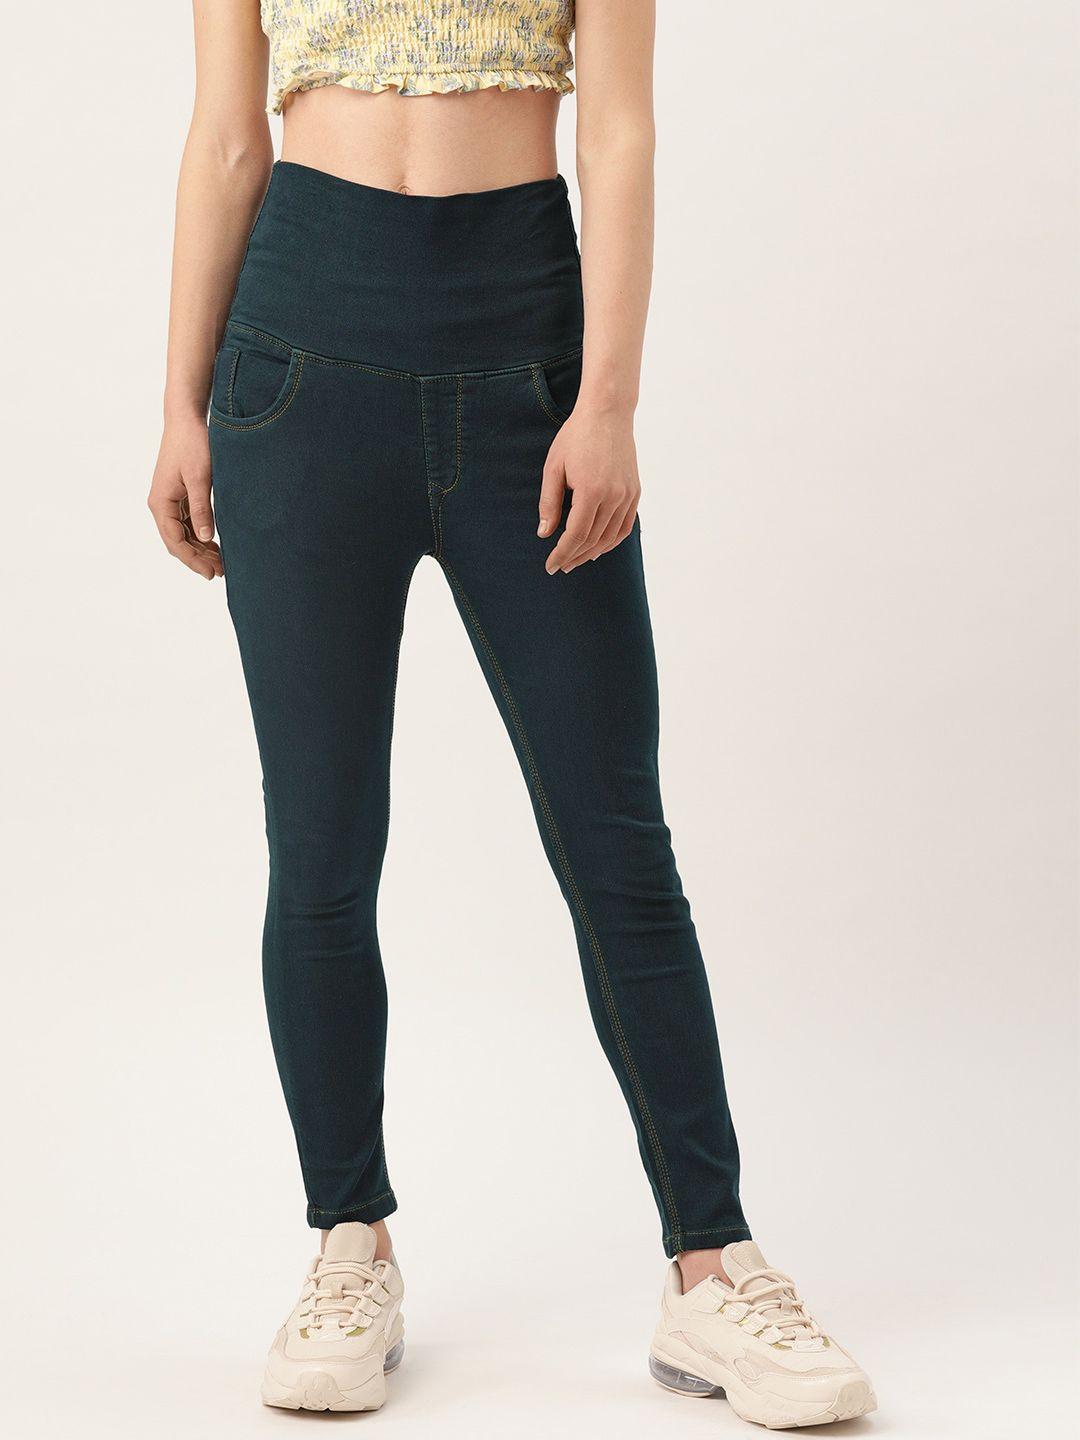 paris hamilton women navy blue skinny high-rise tummy tucker clean look stretchable jeans